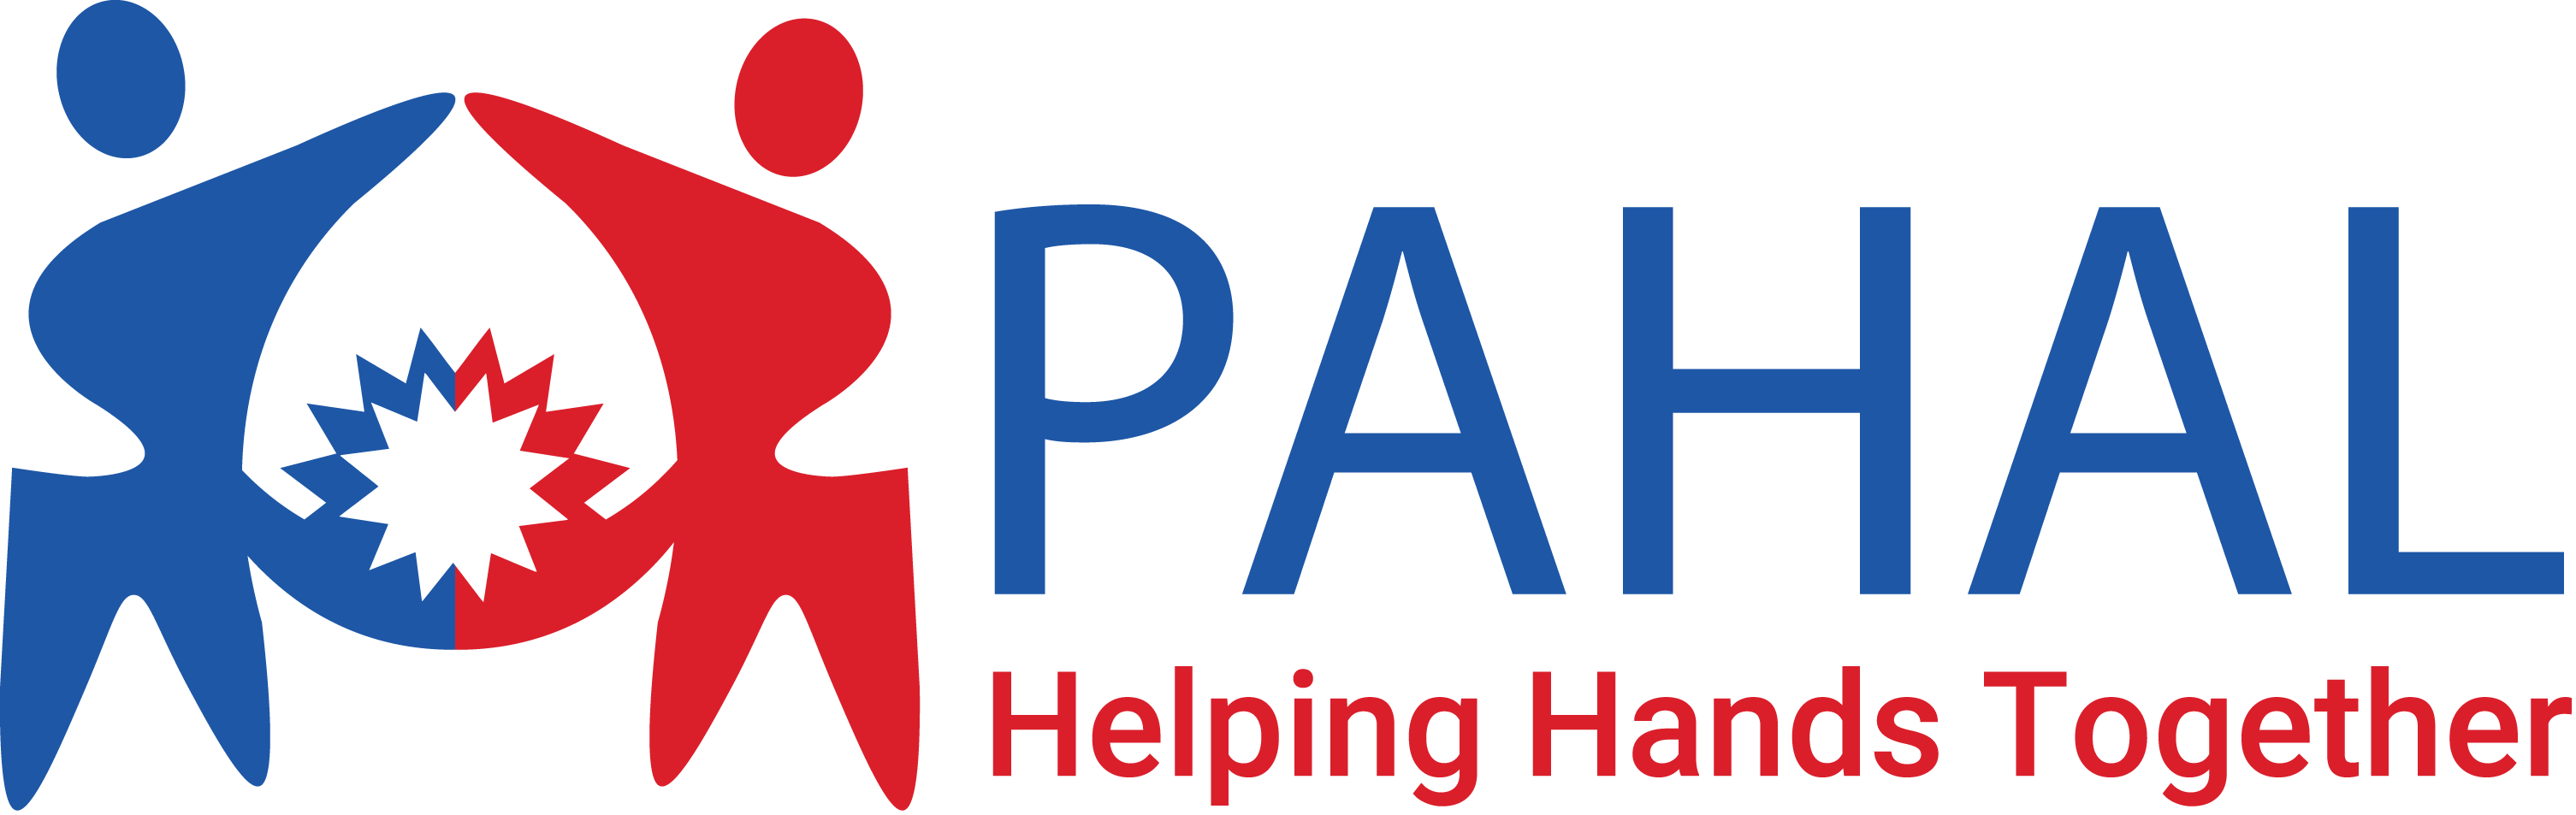 Pahal Foundation - MHMPA Nepal